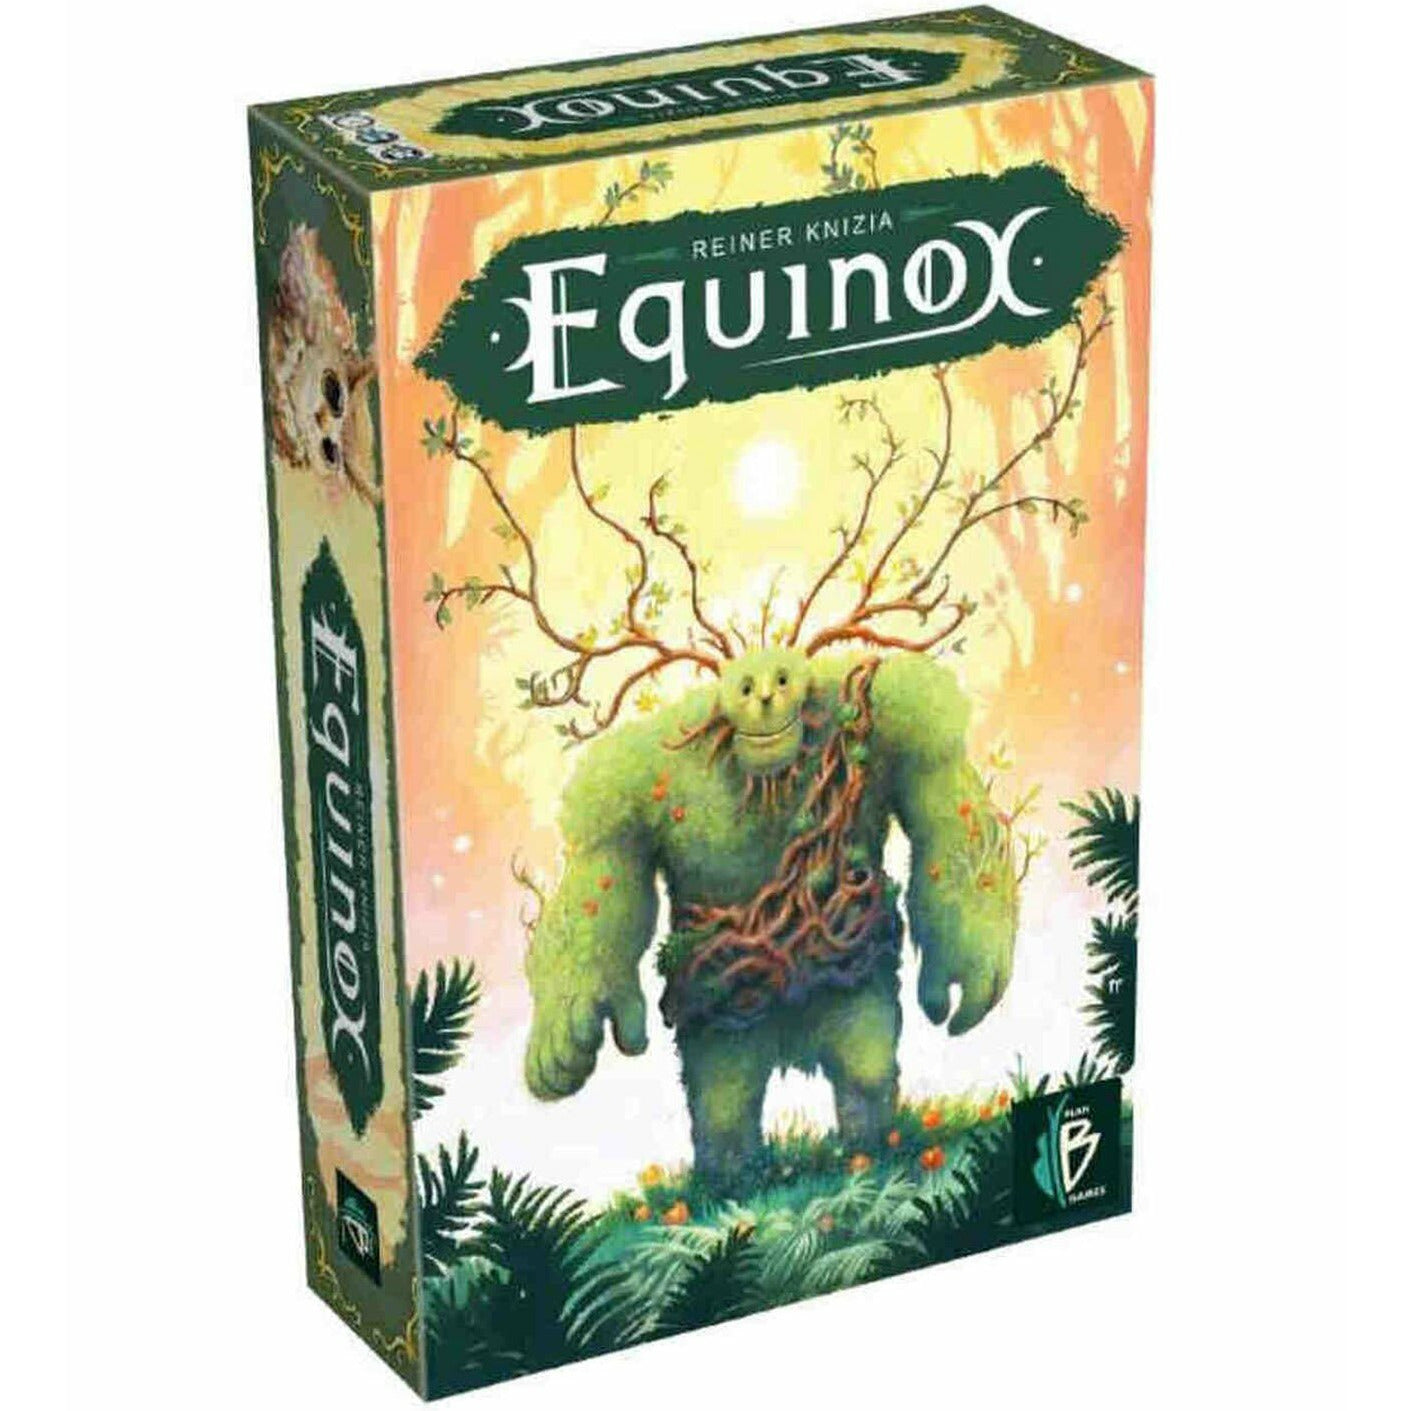 Equinox - Green Box